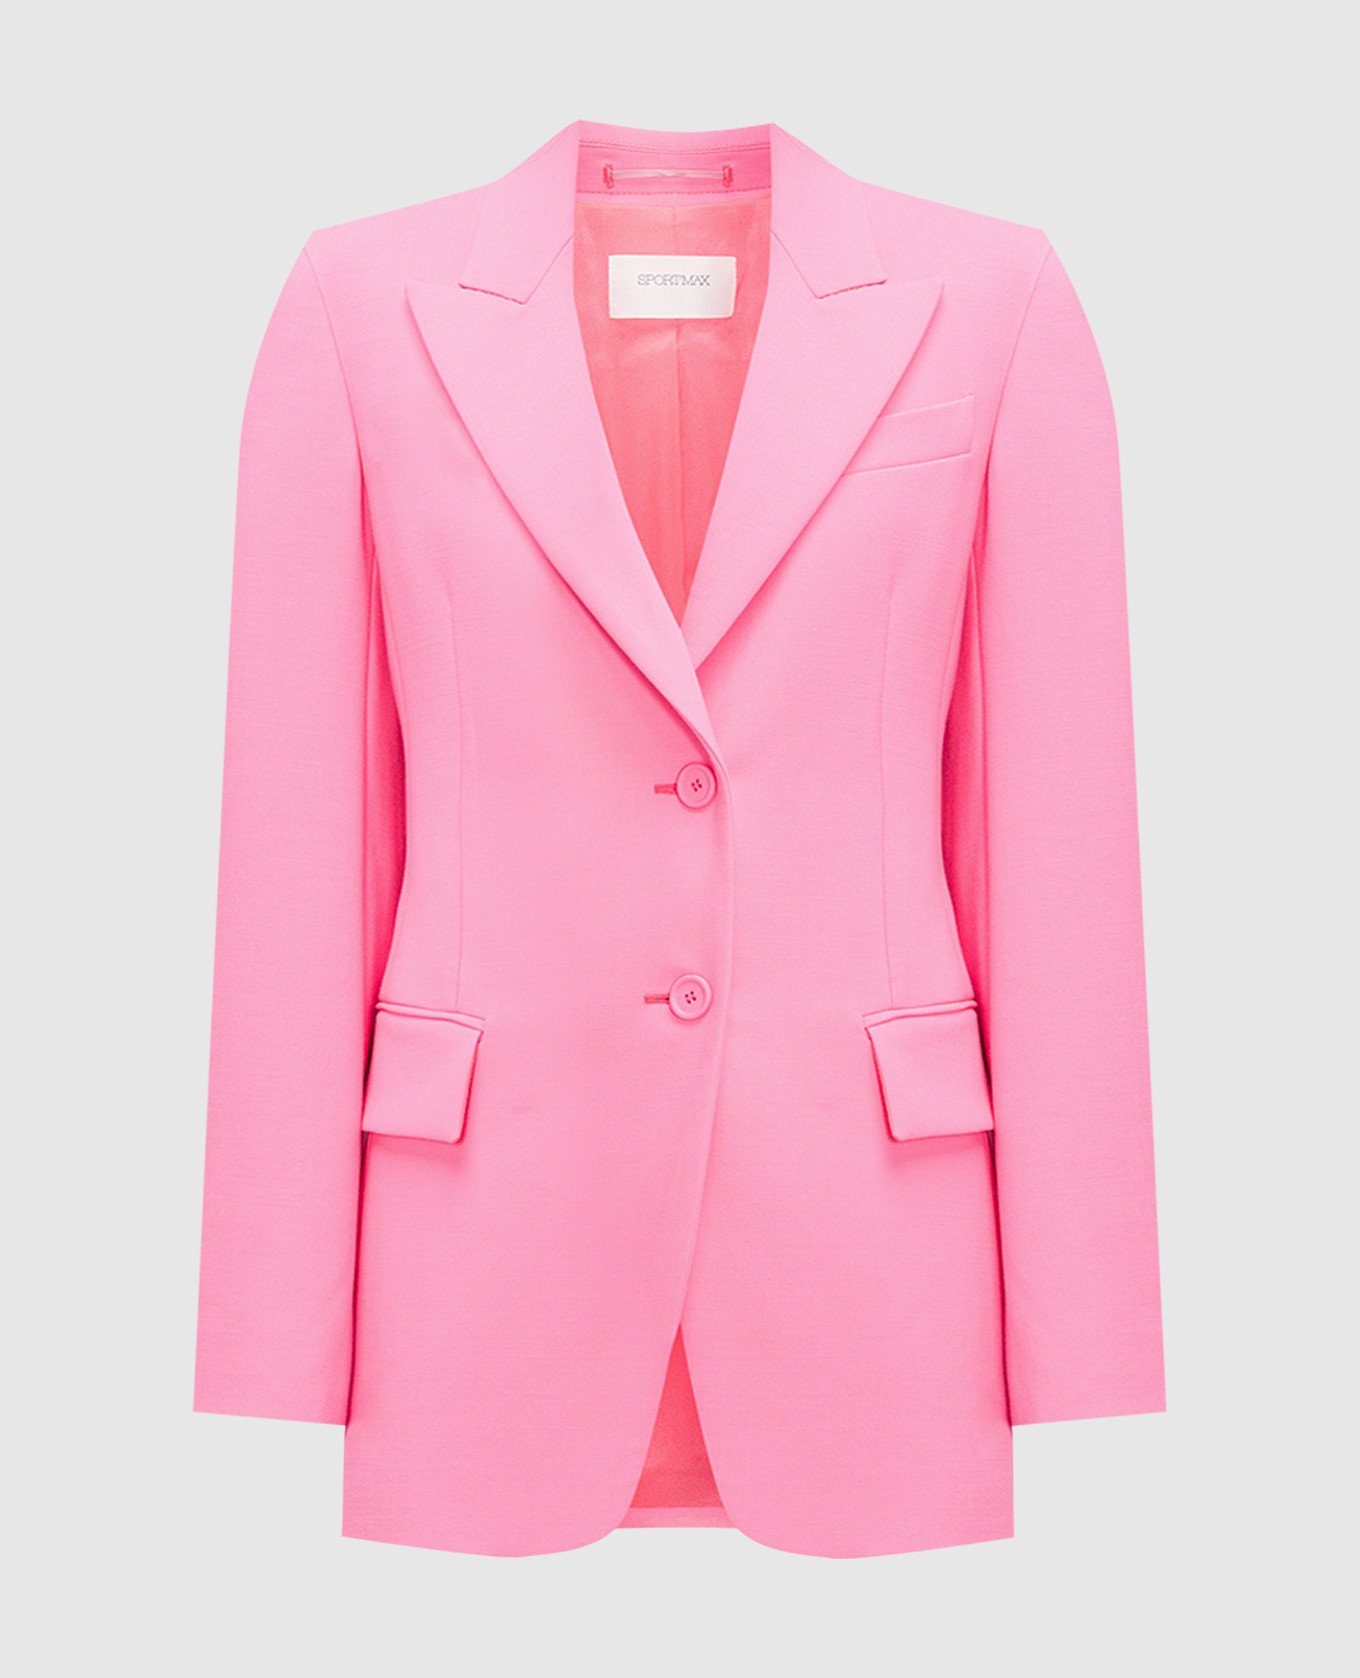 Zerma pink wool jacket